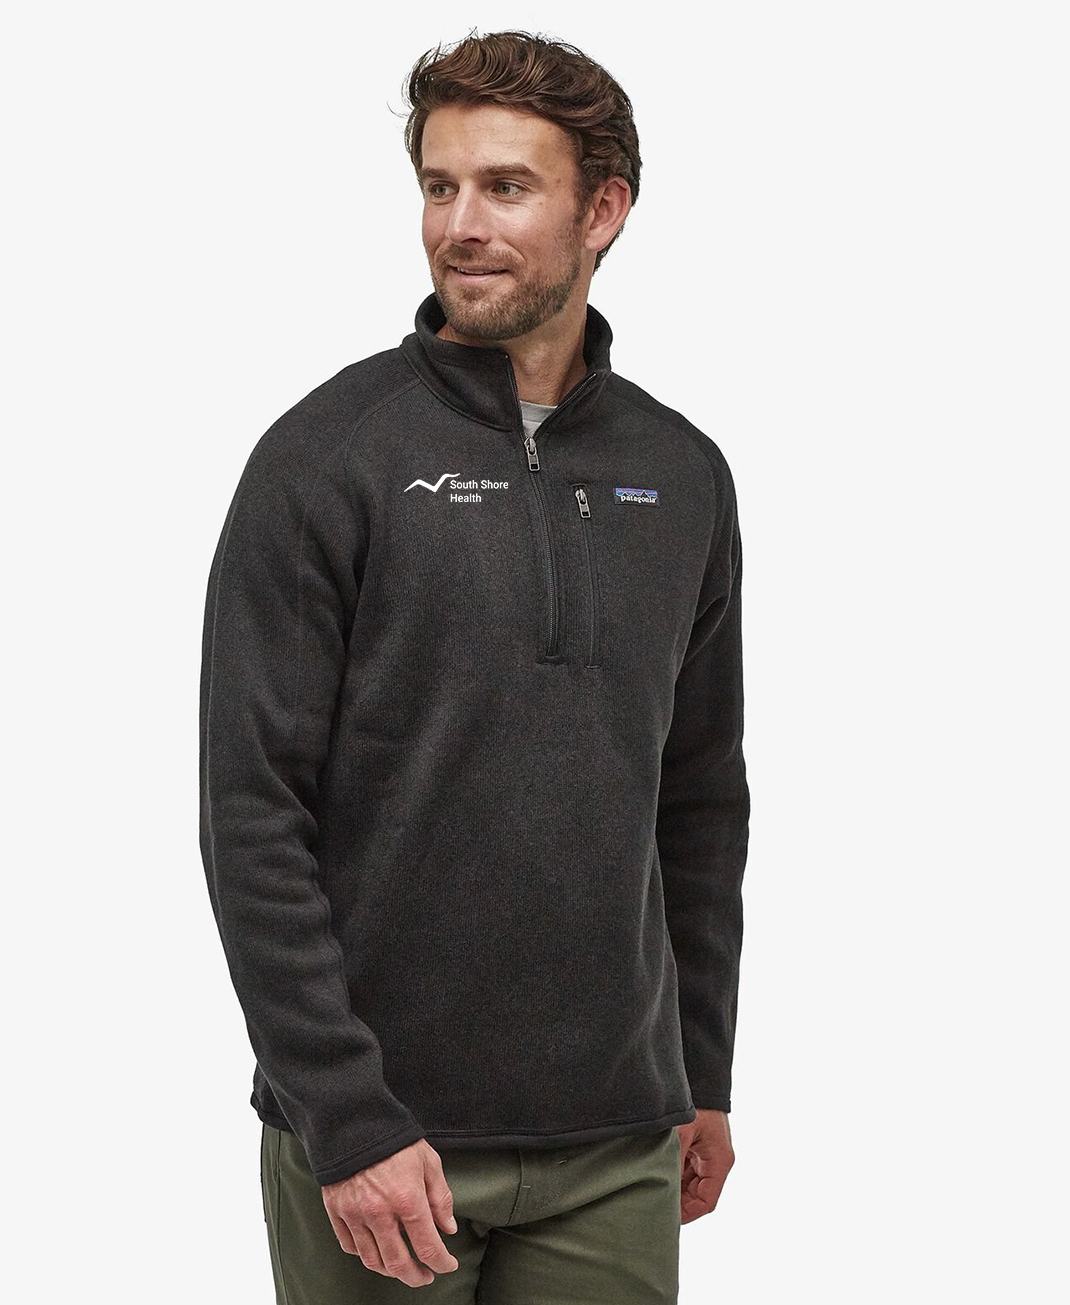 Patagonia Men’s Better Sweater® 1/4-Zip Fleece – South Shore Health Shop